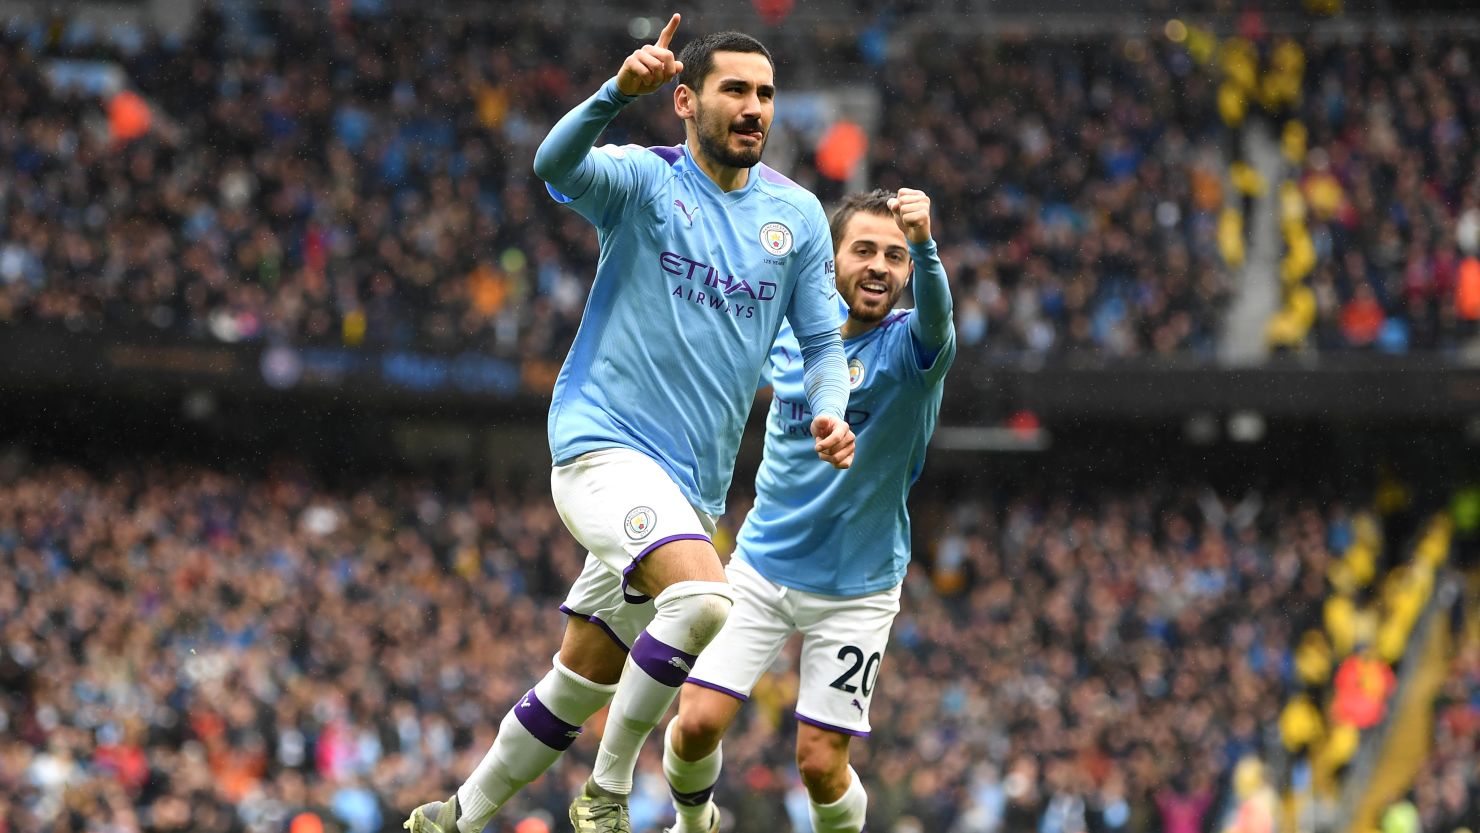  Ilkay Gundogan of Manchester City celebrates after scoring his team's final goal in the 3-0 Premier League win over Aston Villa.